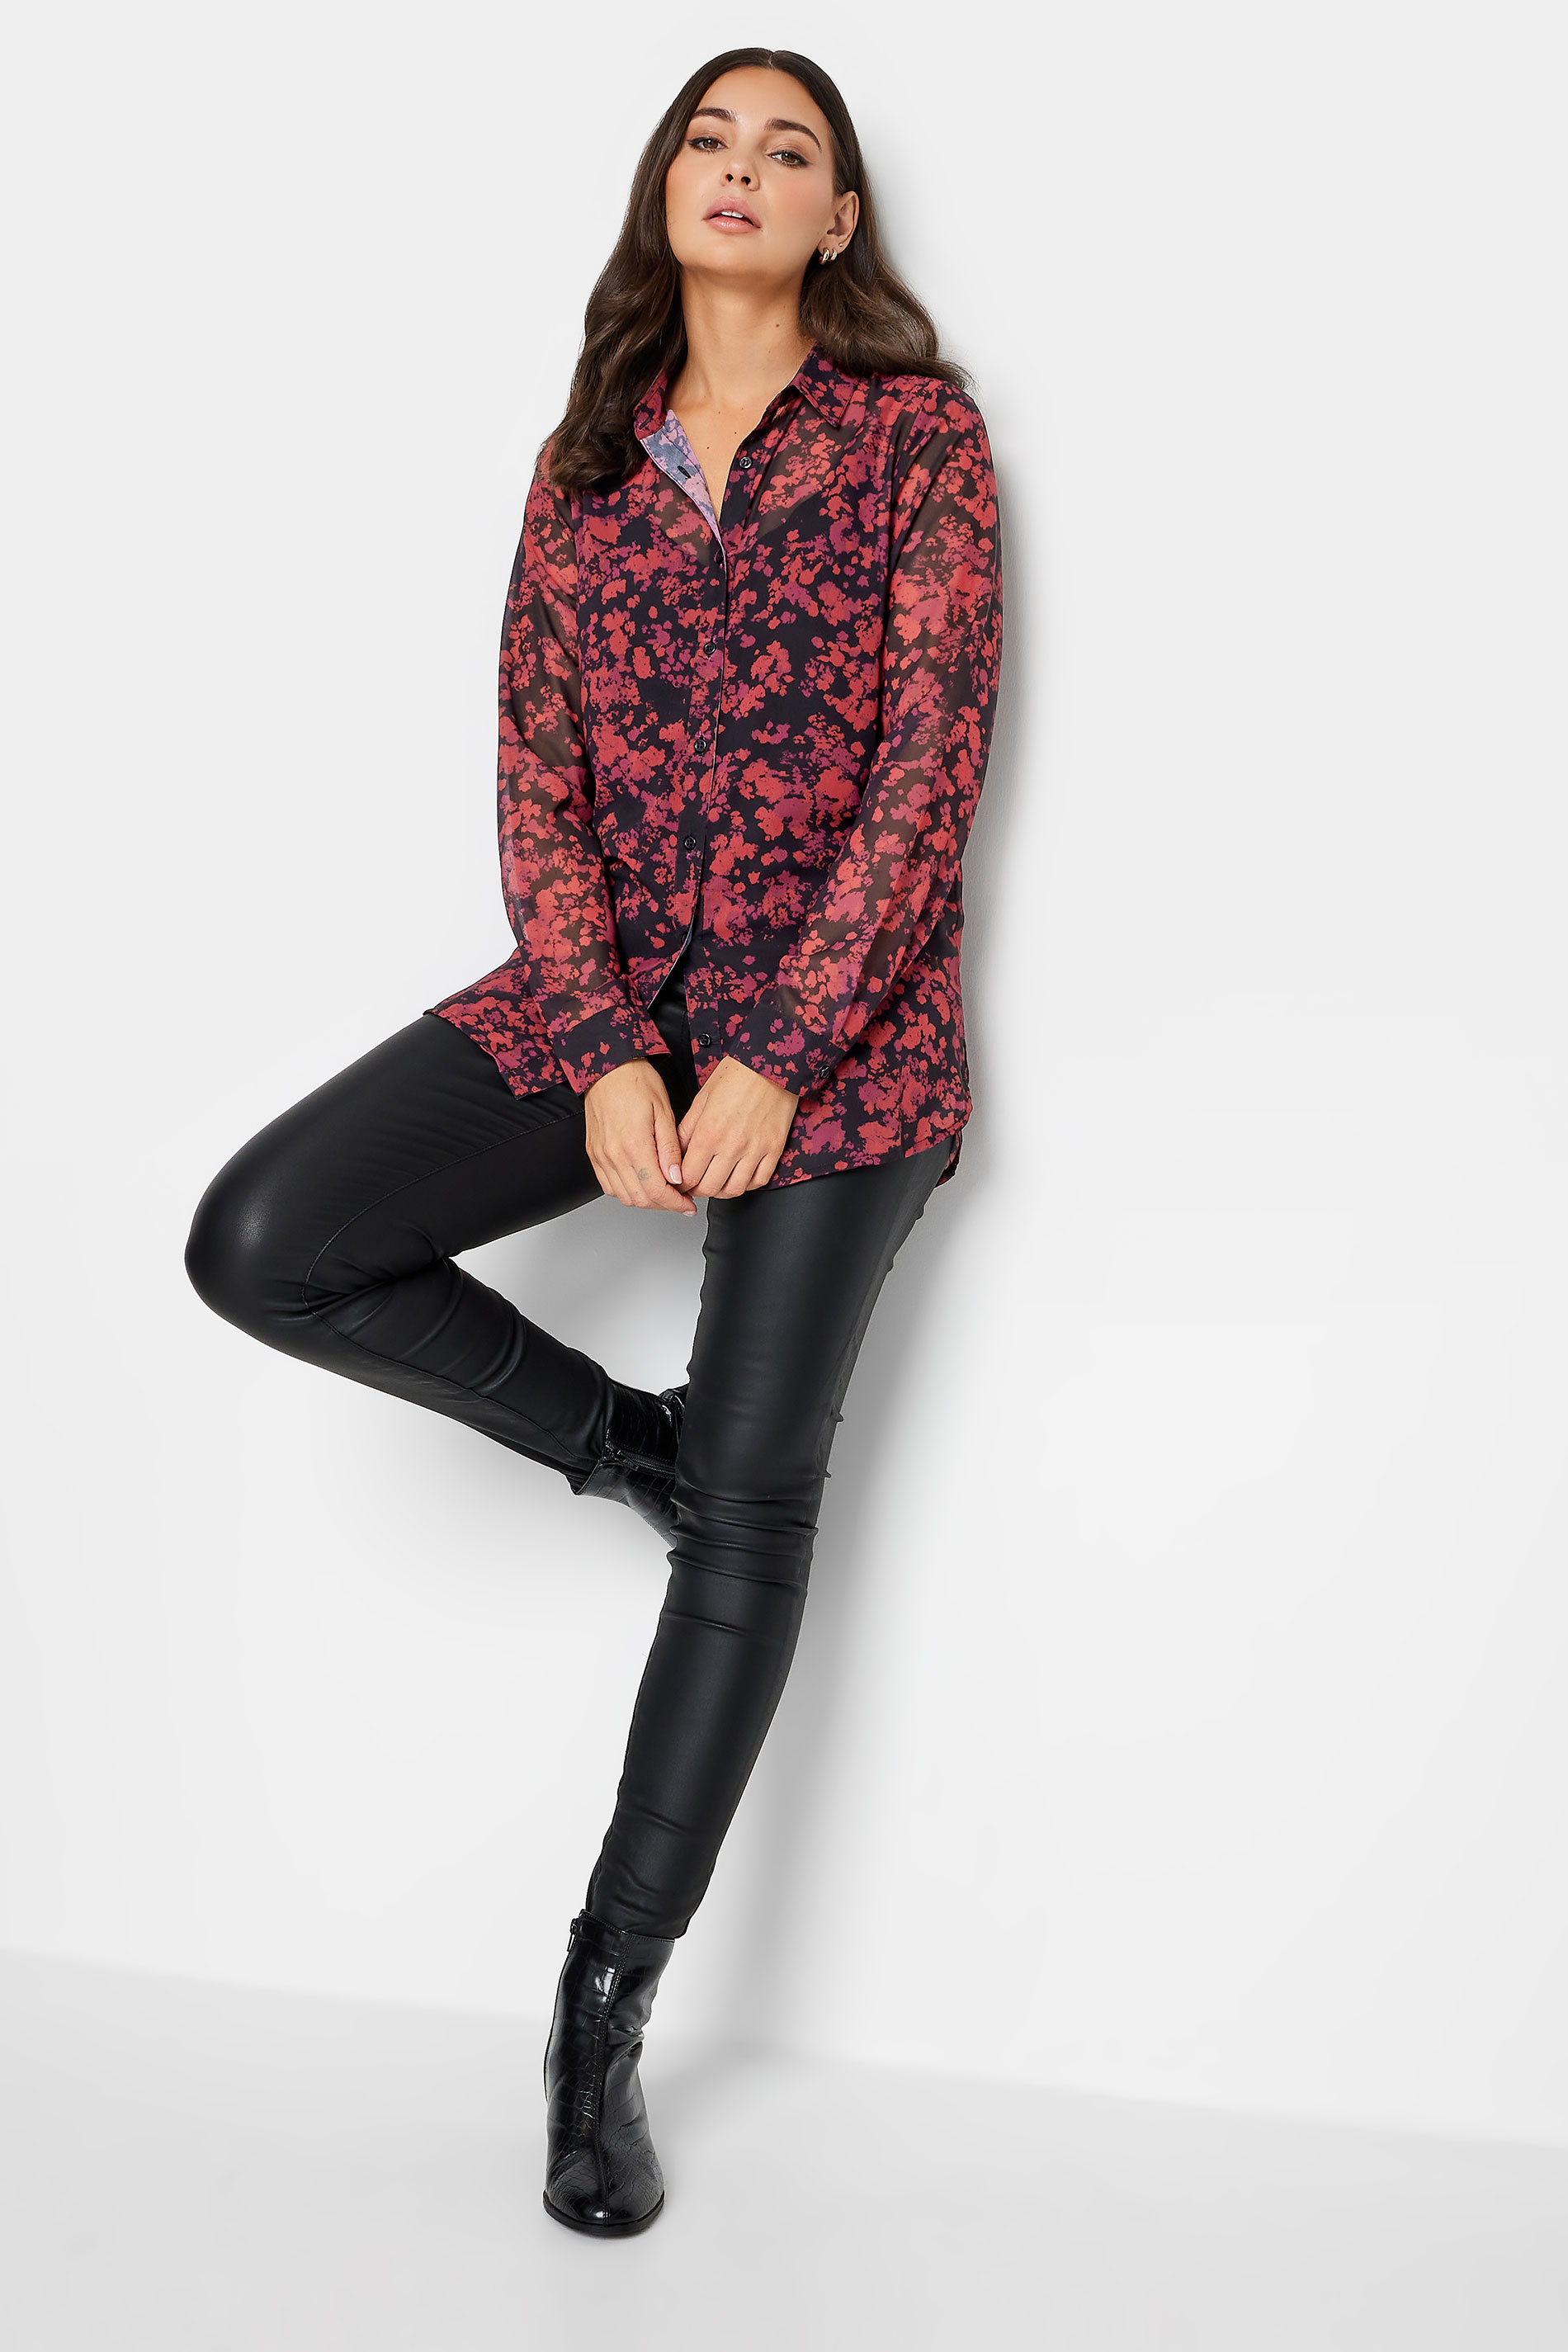 LTS Tall Black & Red Blurred Floral Print Shirt | Long Tall Sally 2